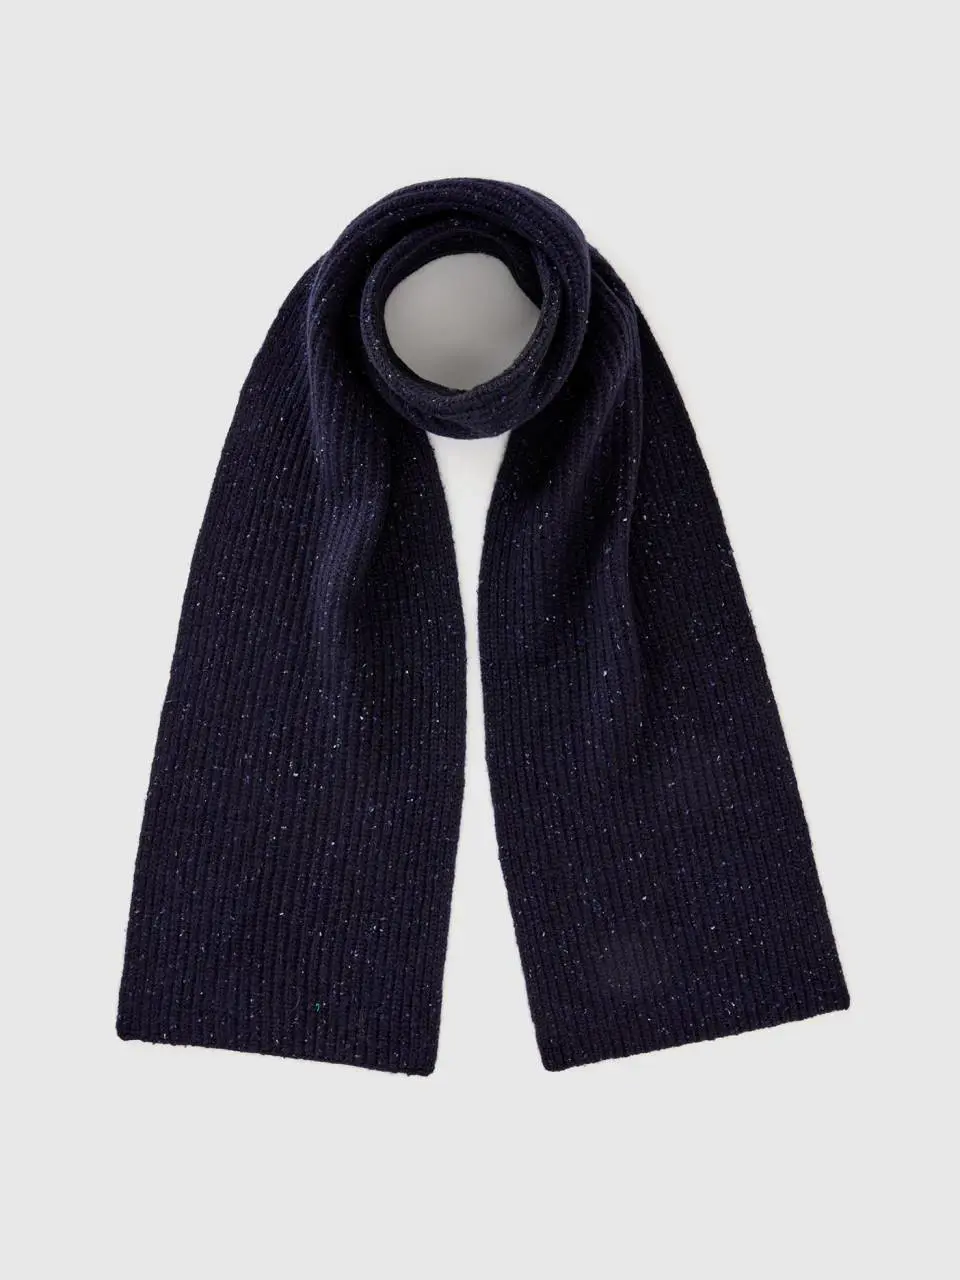 Benetton wool blend scarf. 1